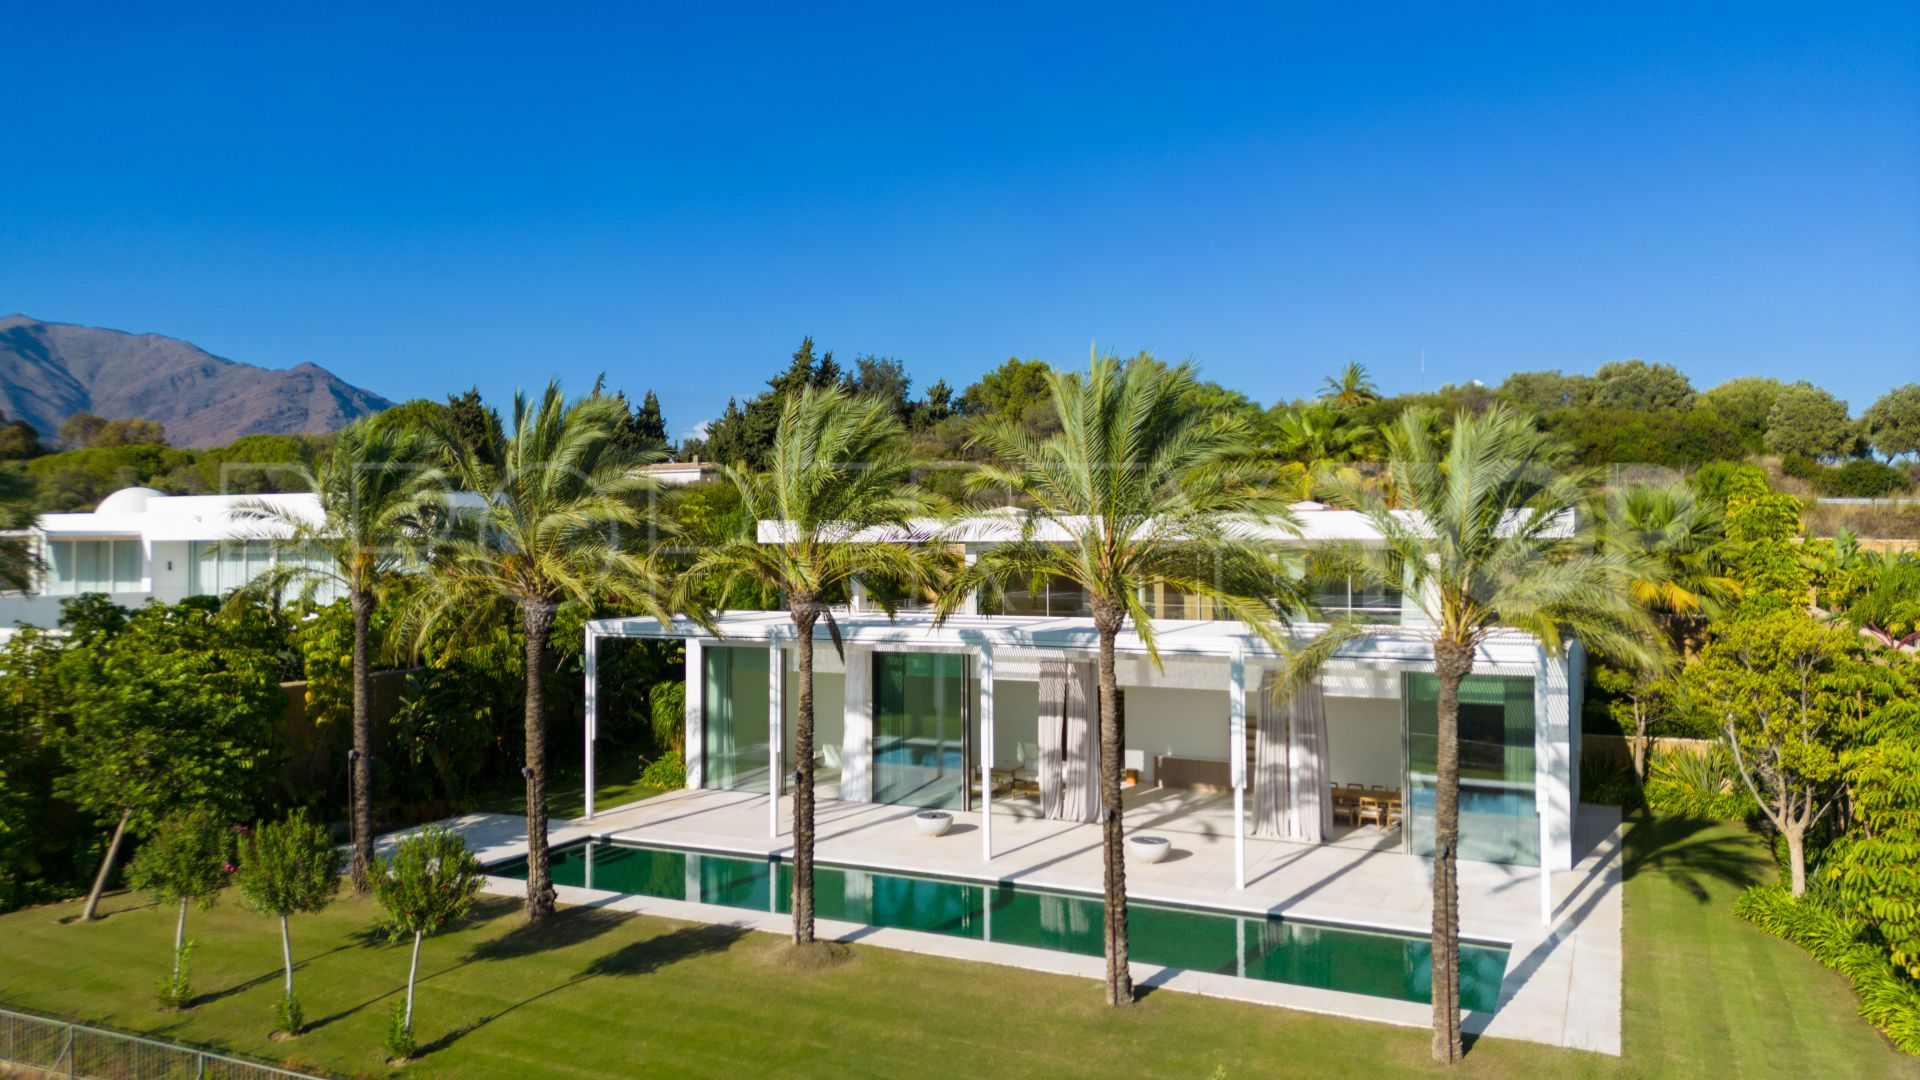 4 bedrooms villa in Finca Cortesin for sale